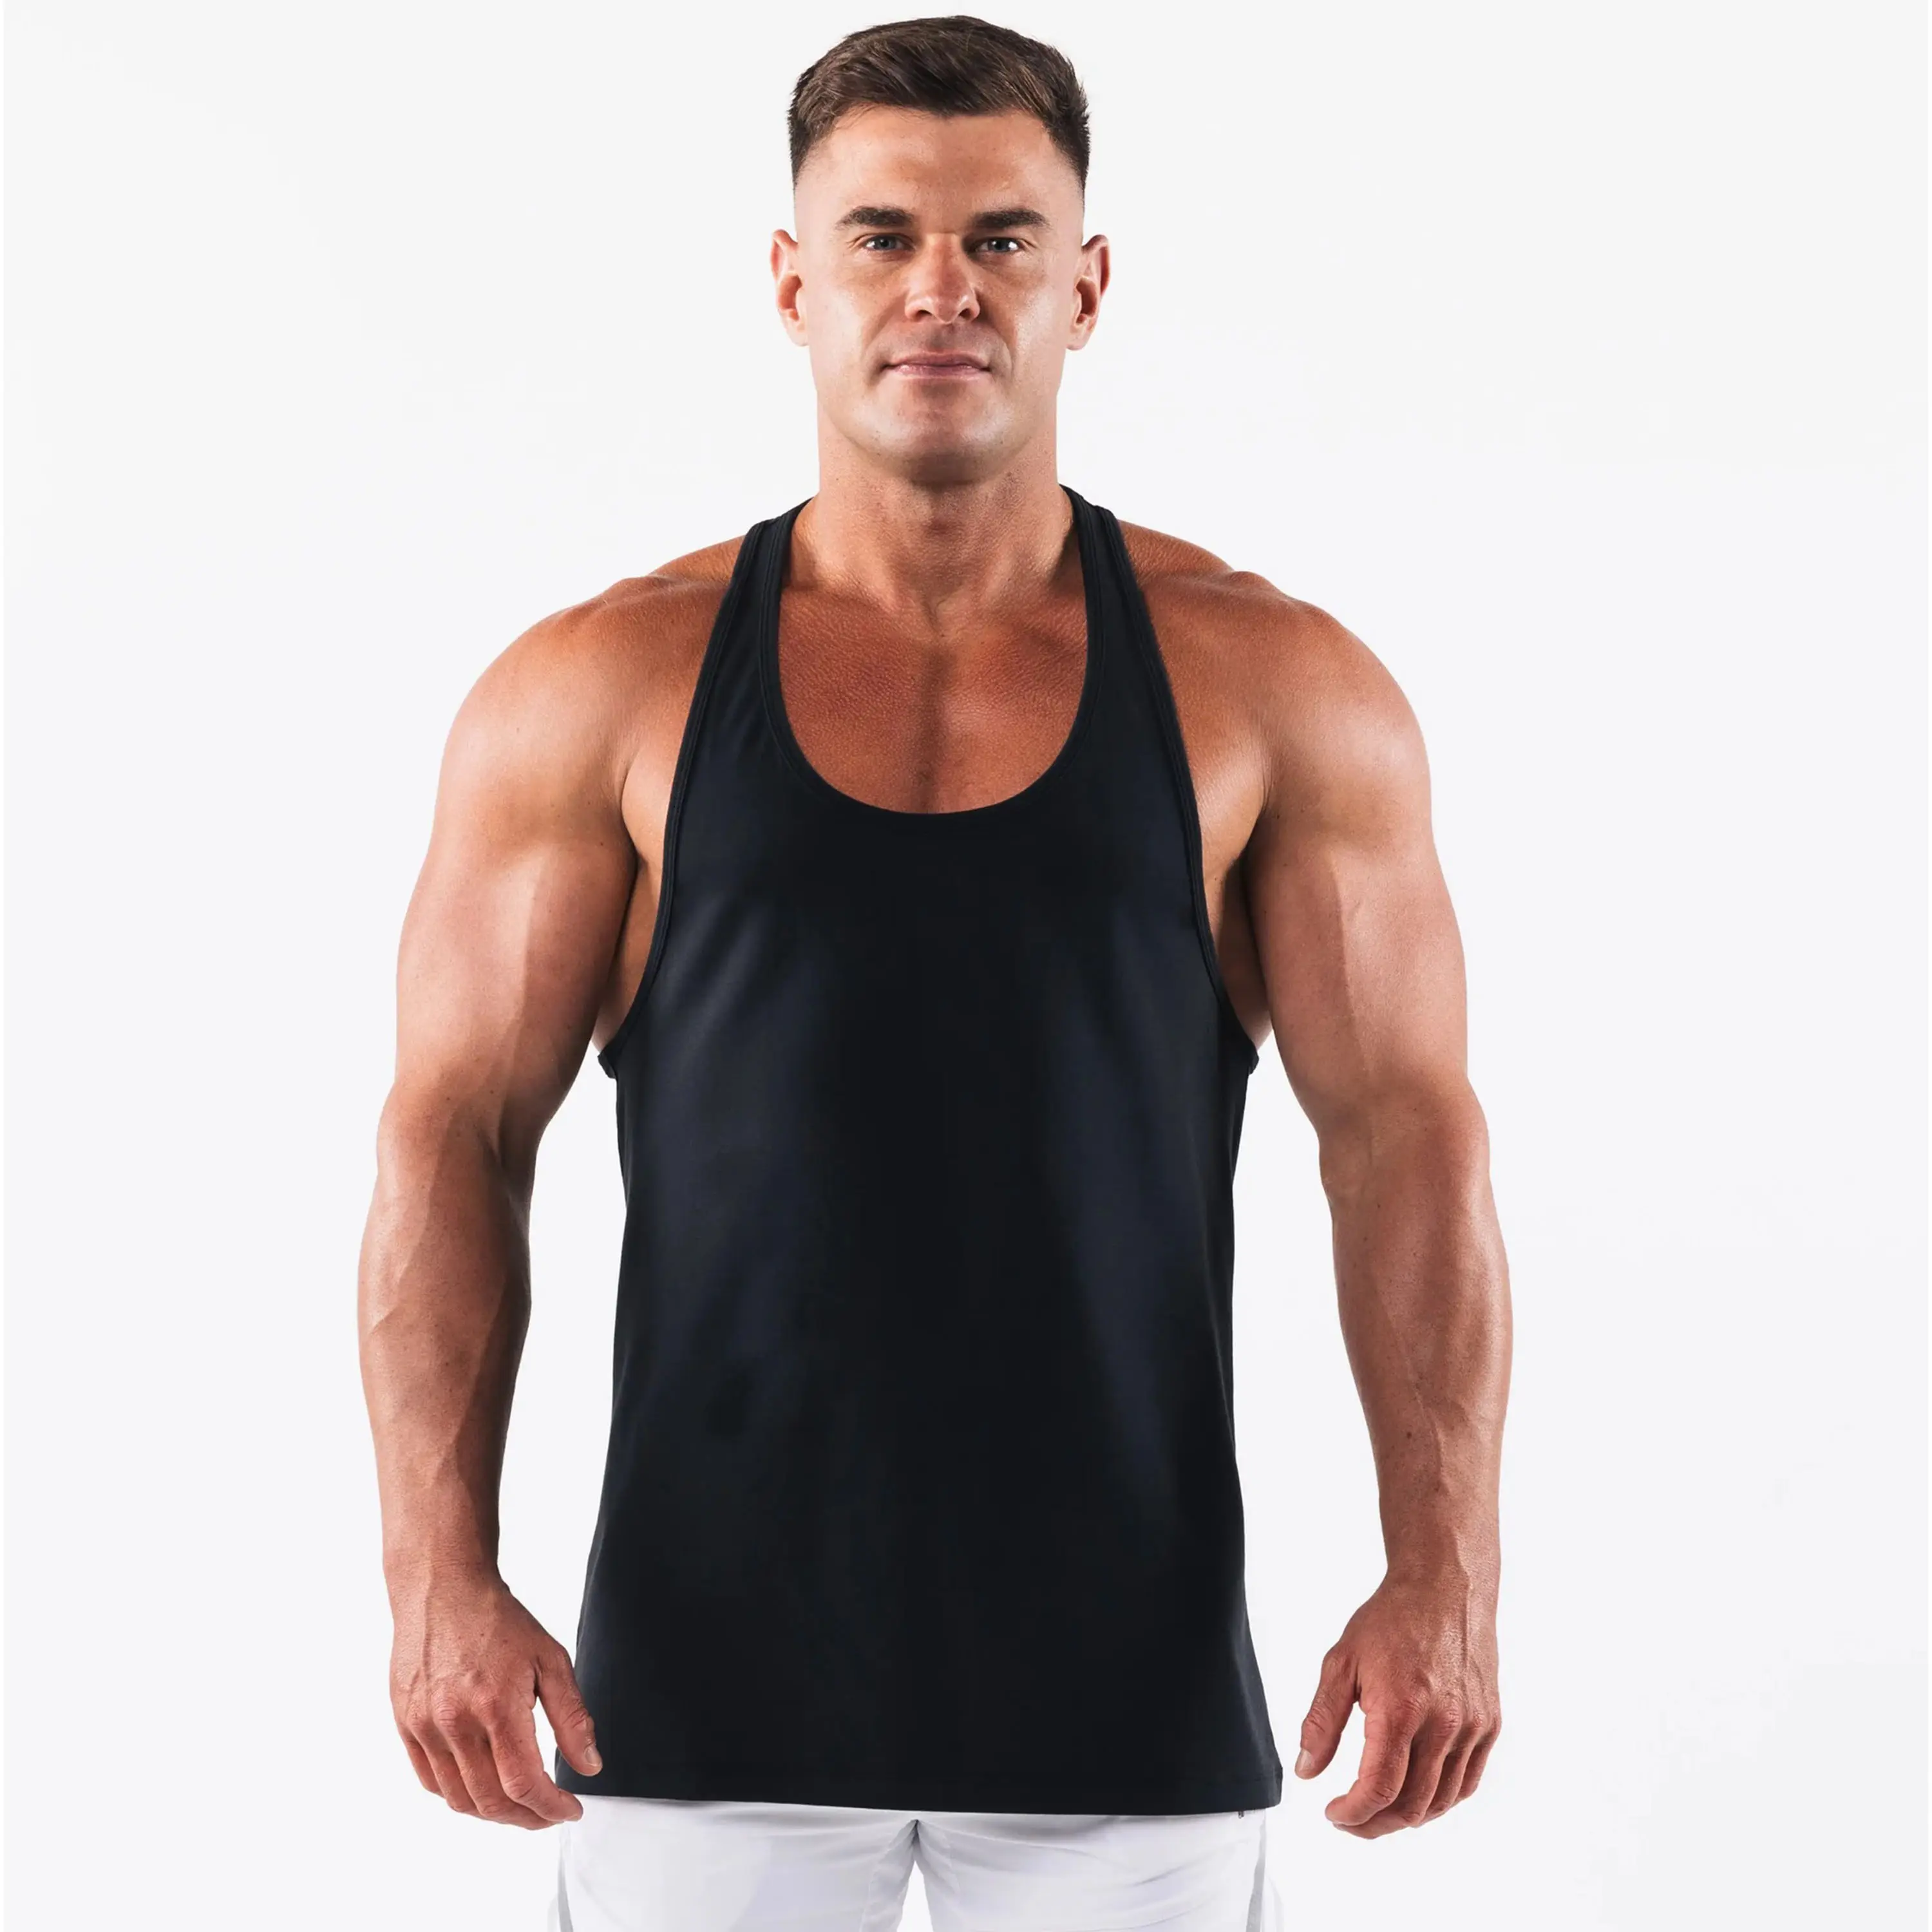 Grosir kaus Tank Top pakaian Gym untuk olahraga binaraga, kaus Tank Top atletik Stringer, pakaian Gym Solid untuk pria